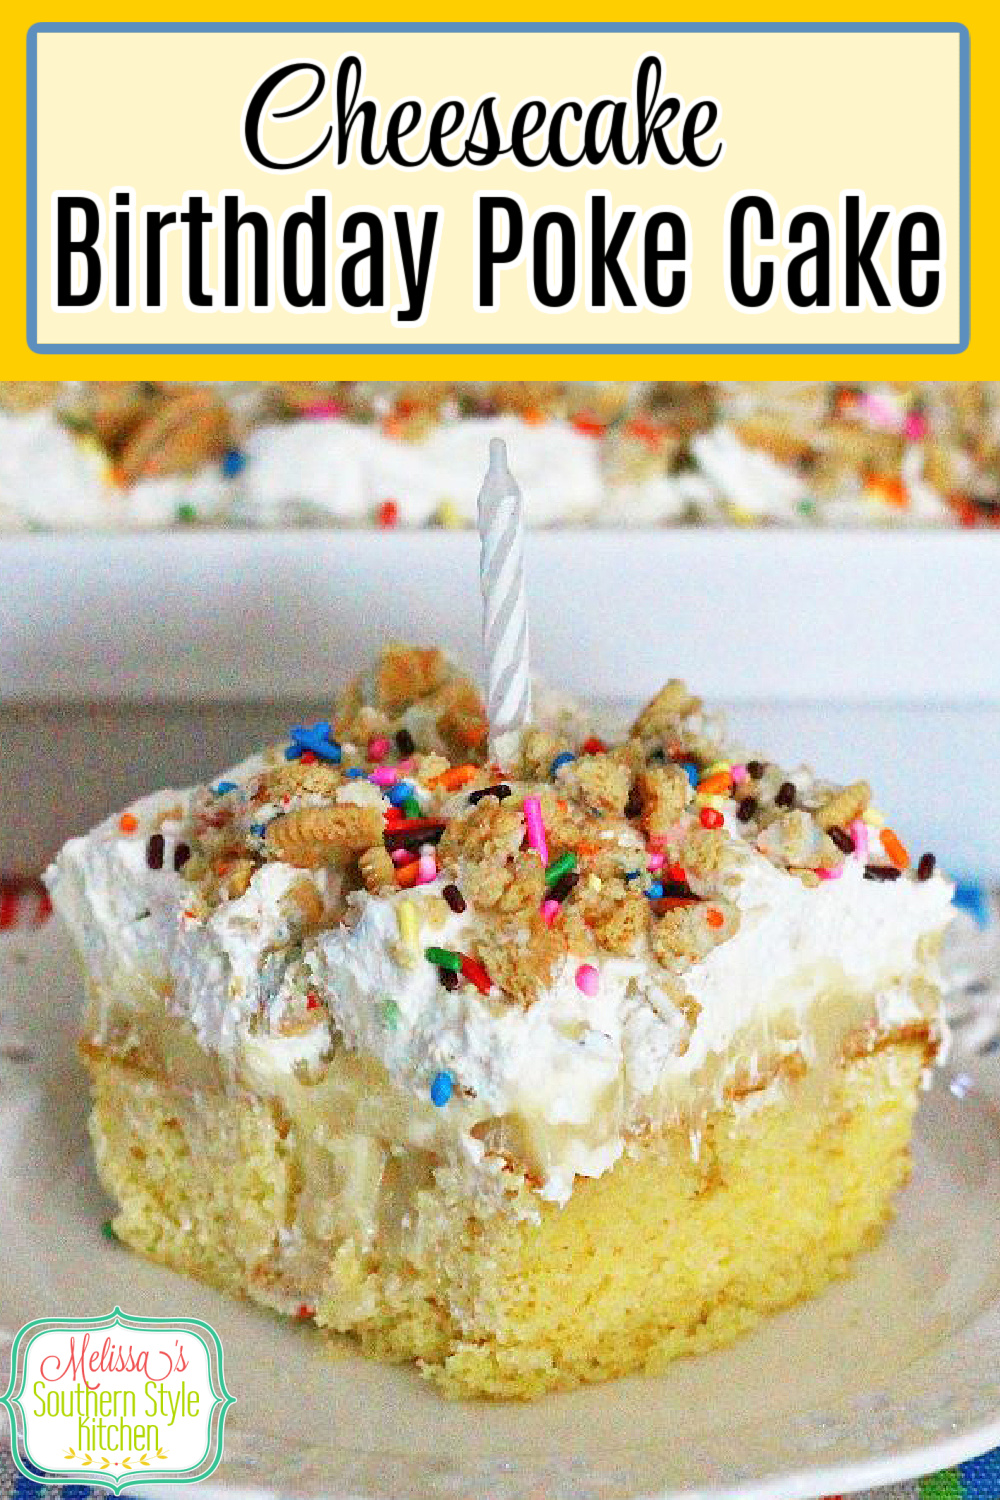 Party ready Cheesecake Birthday Poke Cake #birthdaycake #pokecake #cakerecipes #cakes #cheesecake #desserts #dessertfoodrecipes #southernfood #southernrecipes #partyfood via @melissasssk